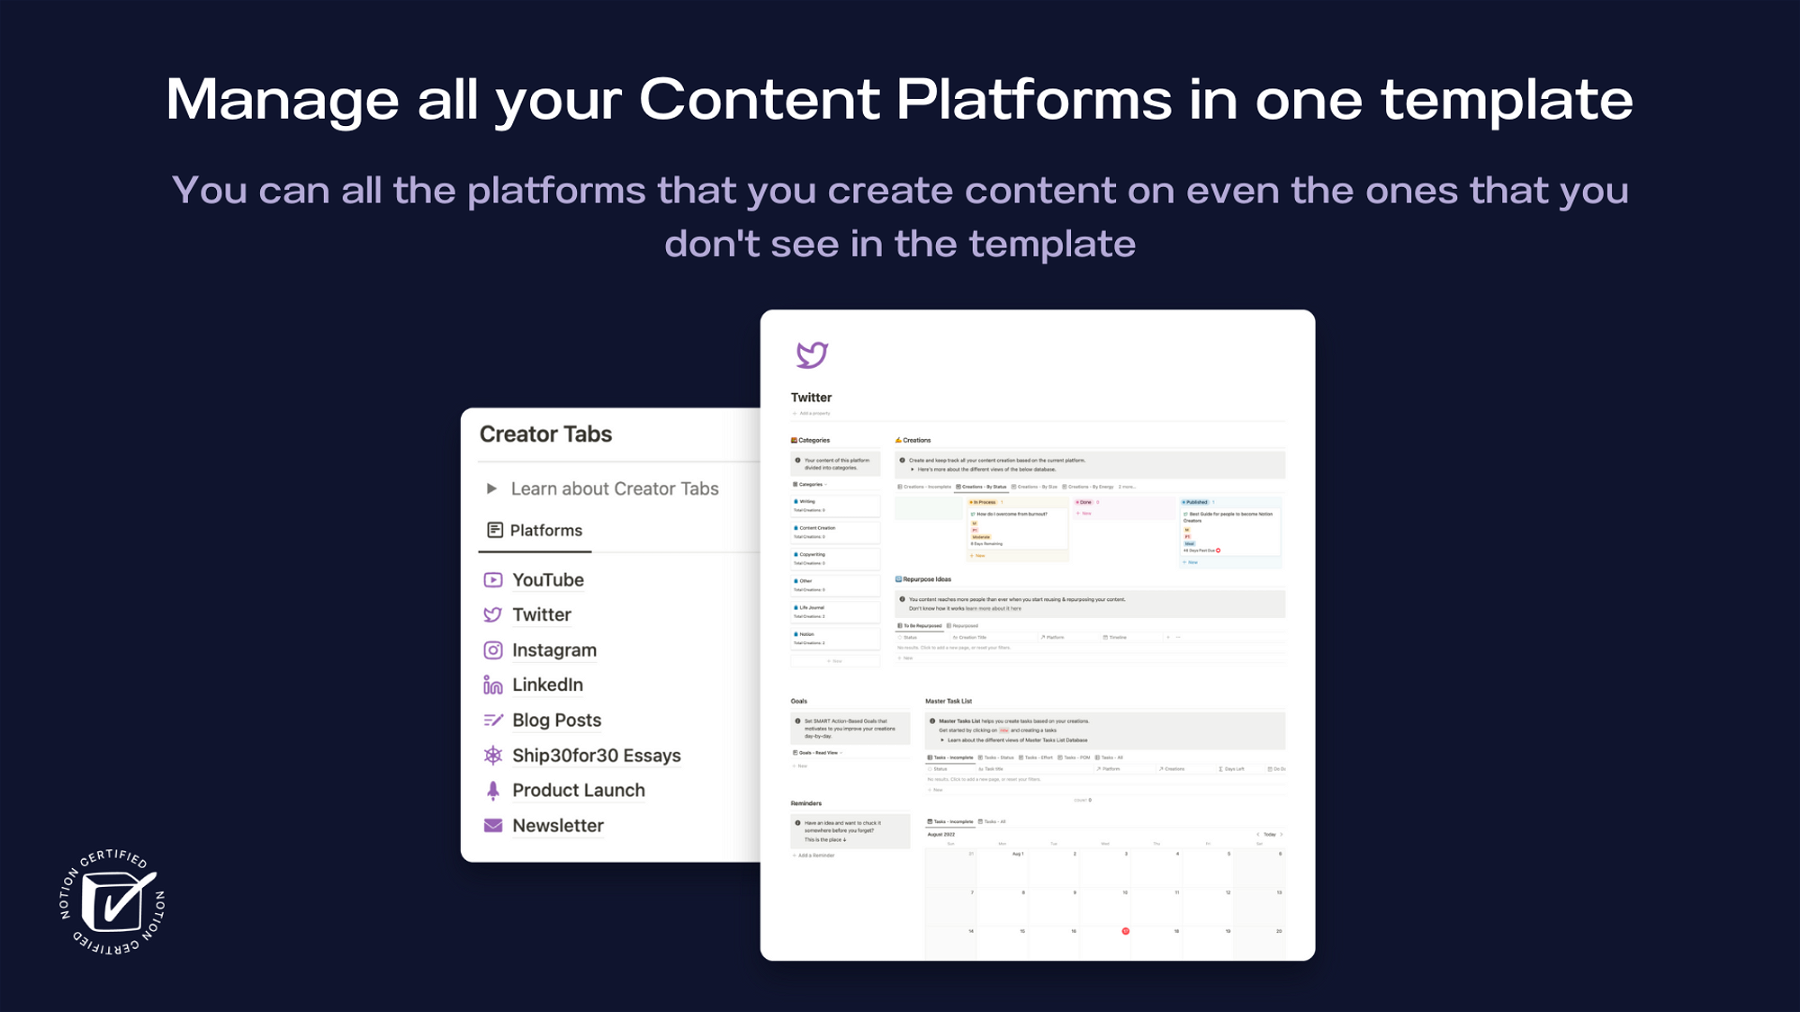 Content Creation Hub